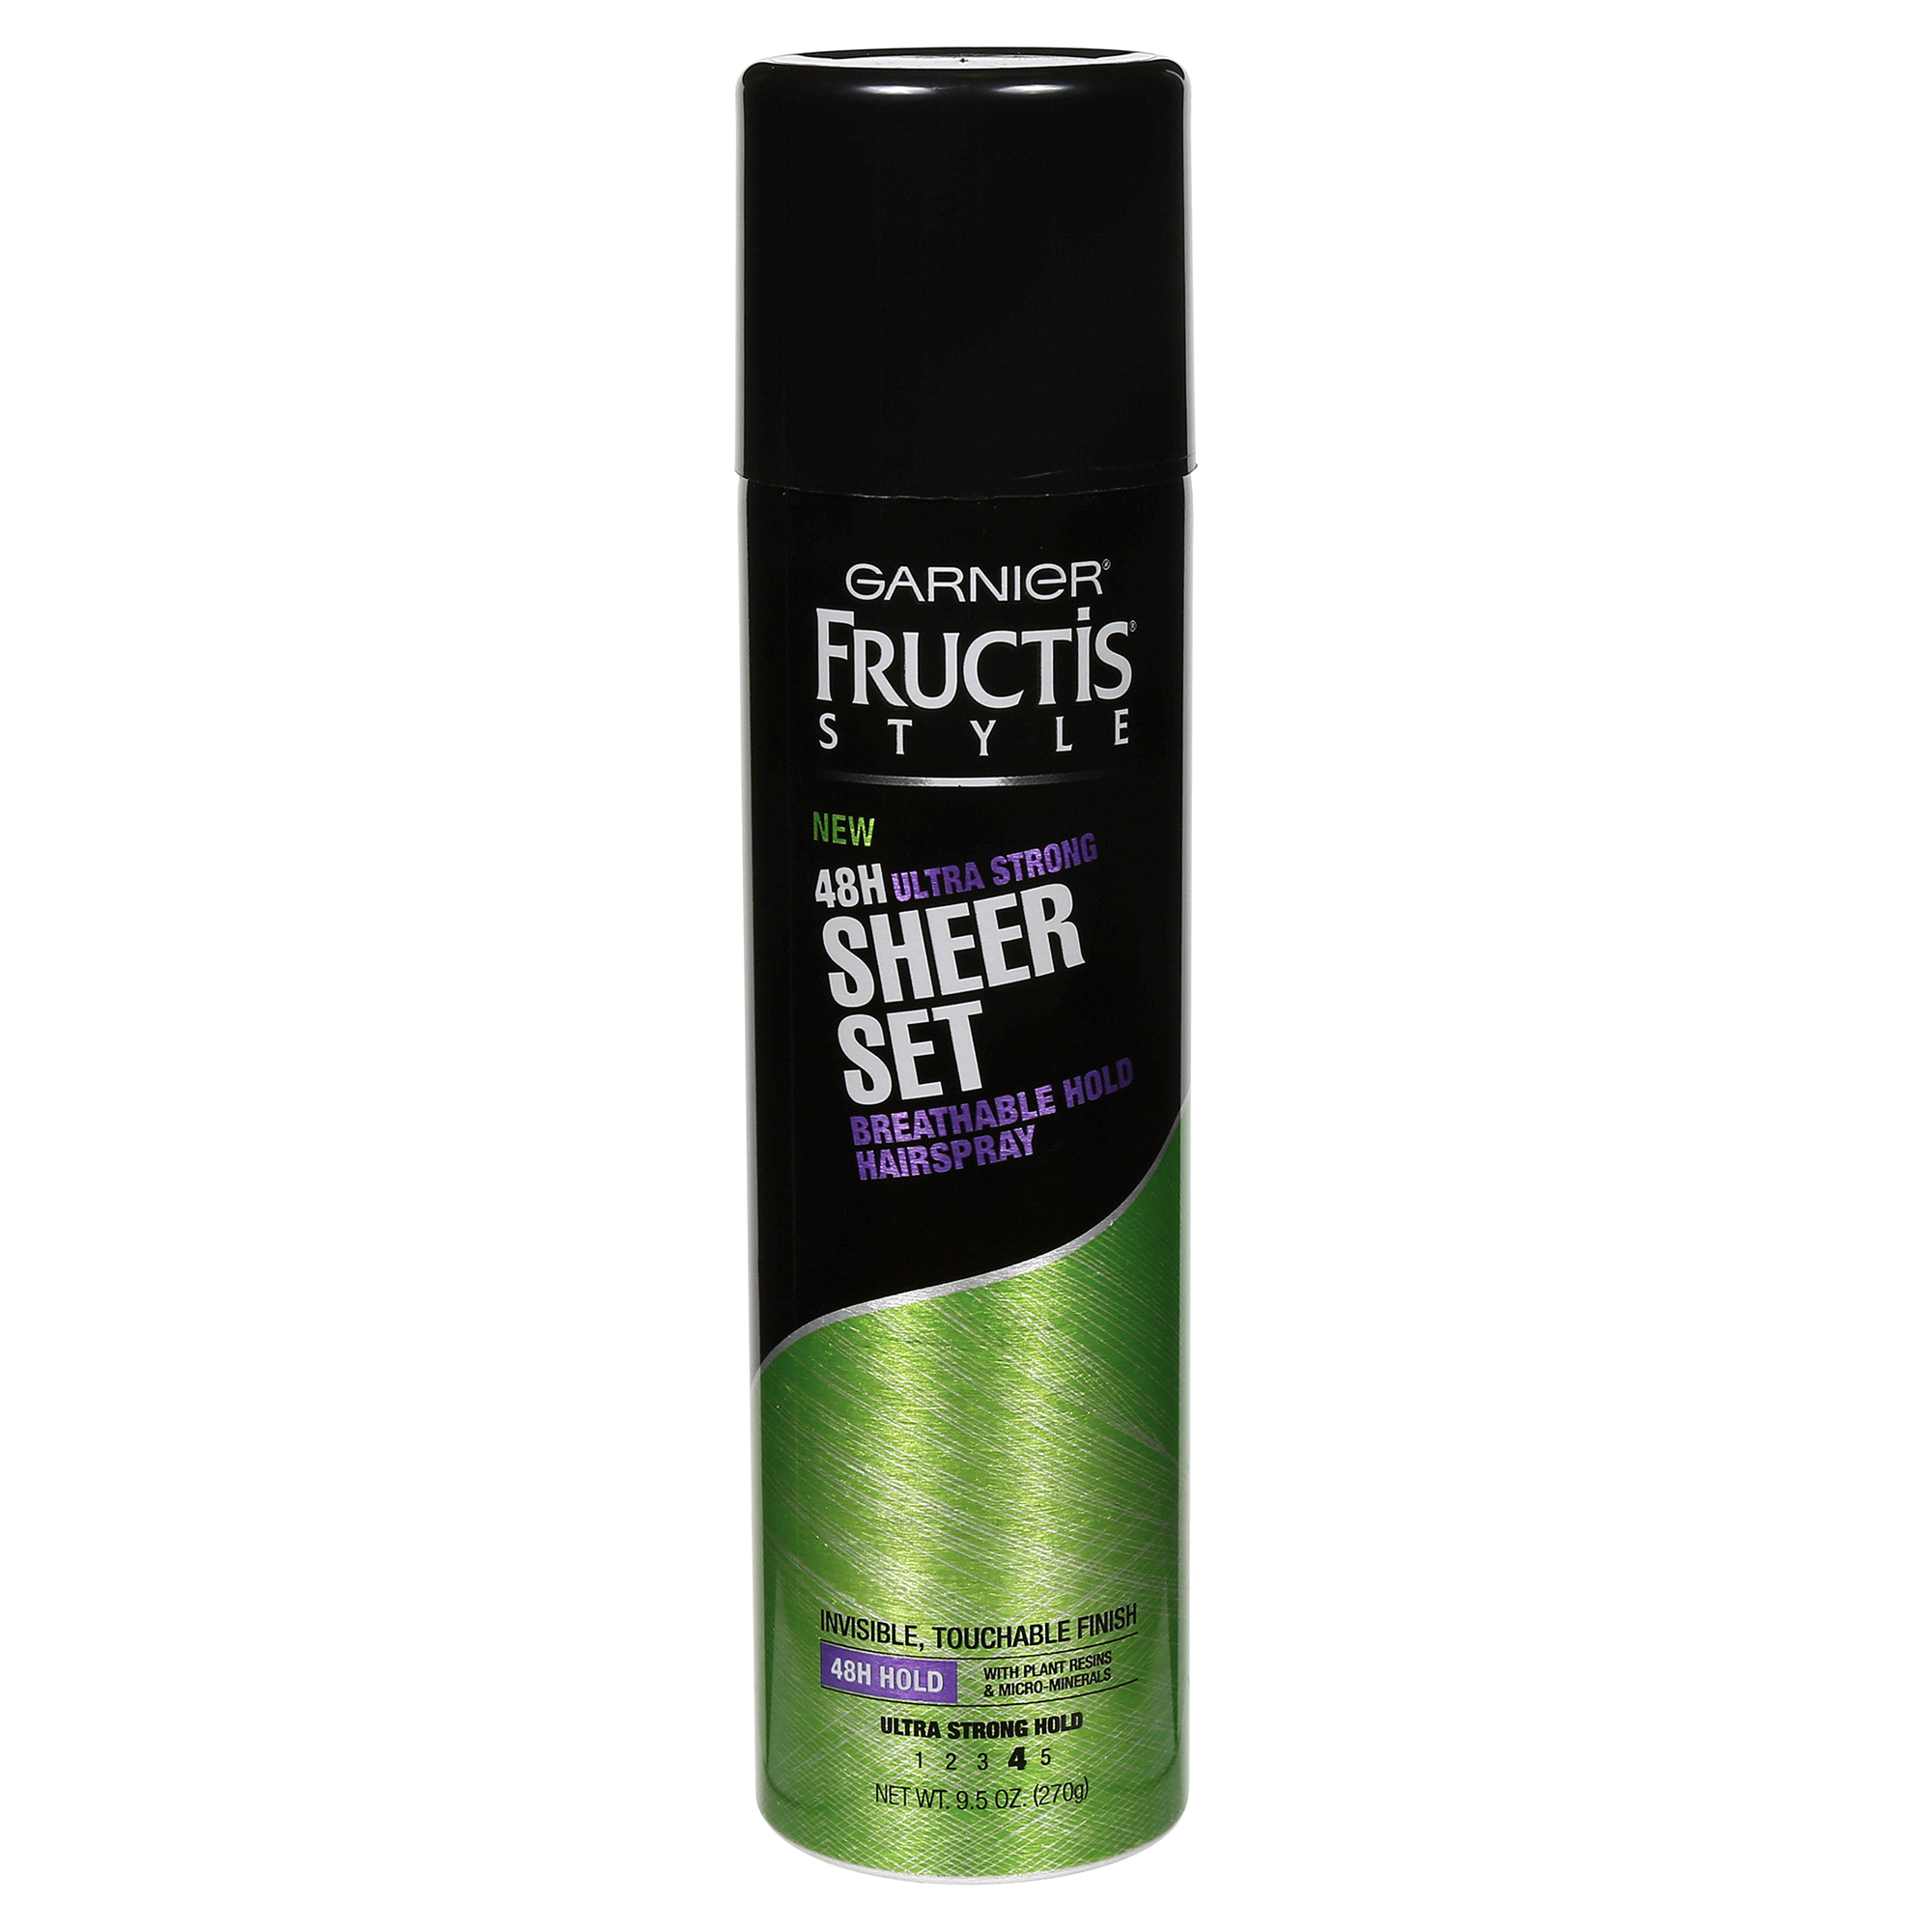 Garnier Fructis Style Sheer Set Breathable Hold Hairspray | Mane Addicts